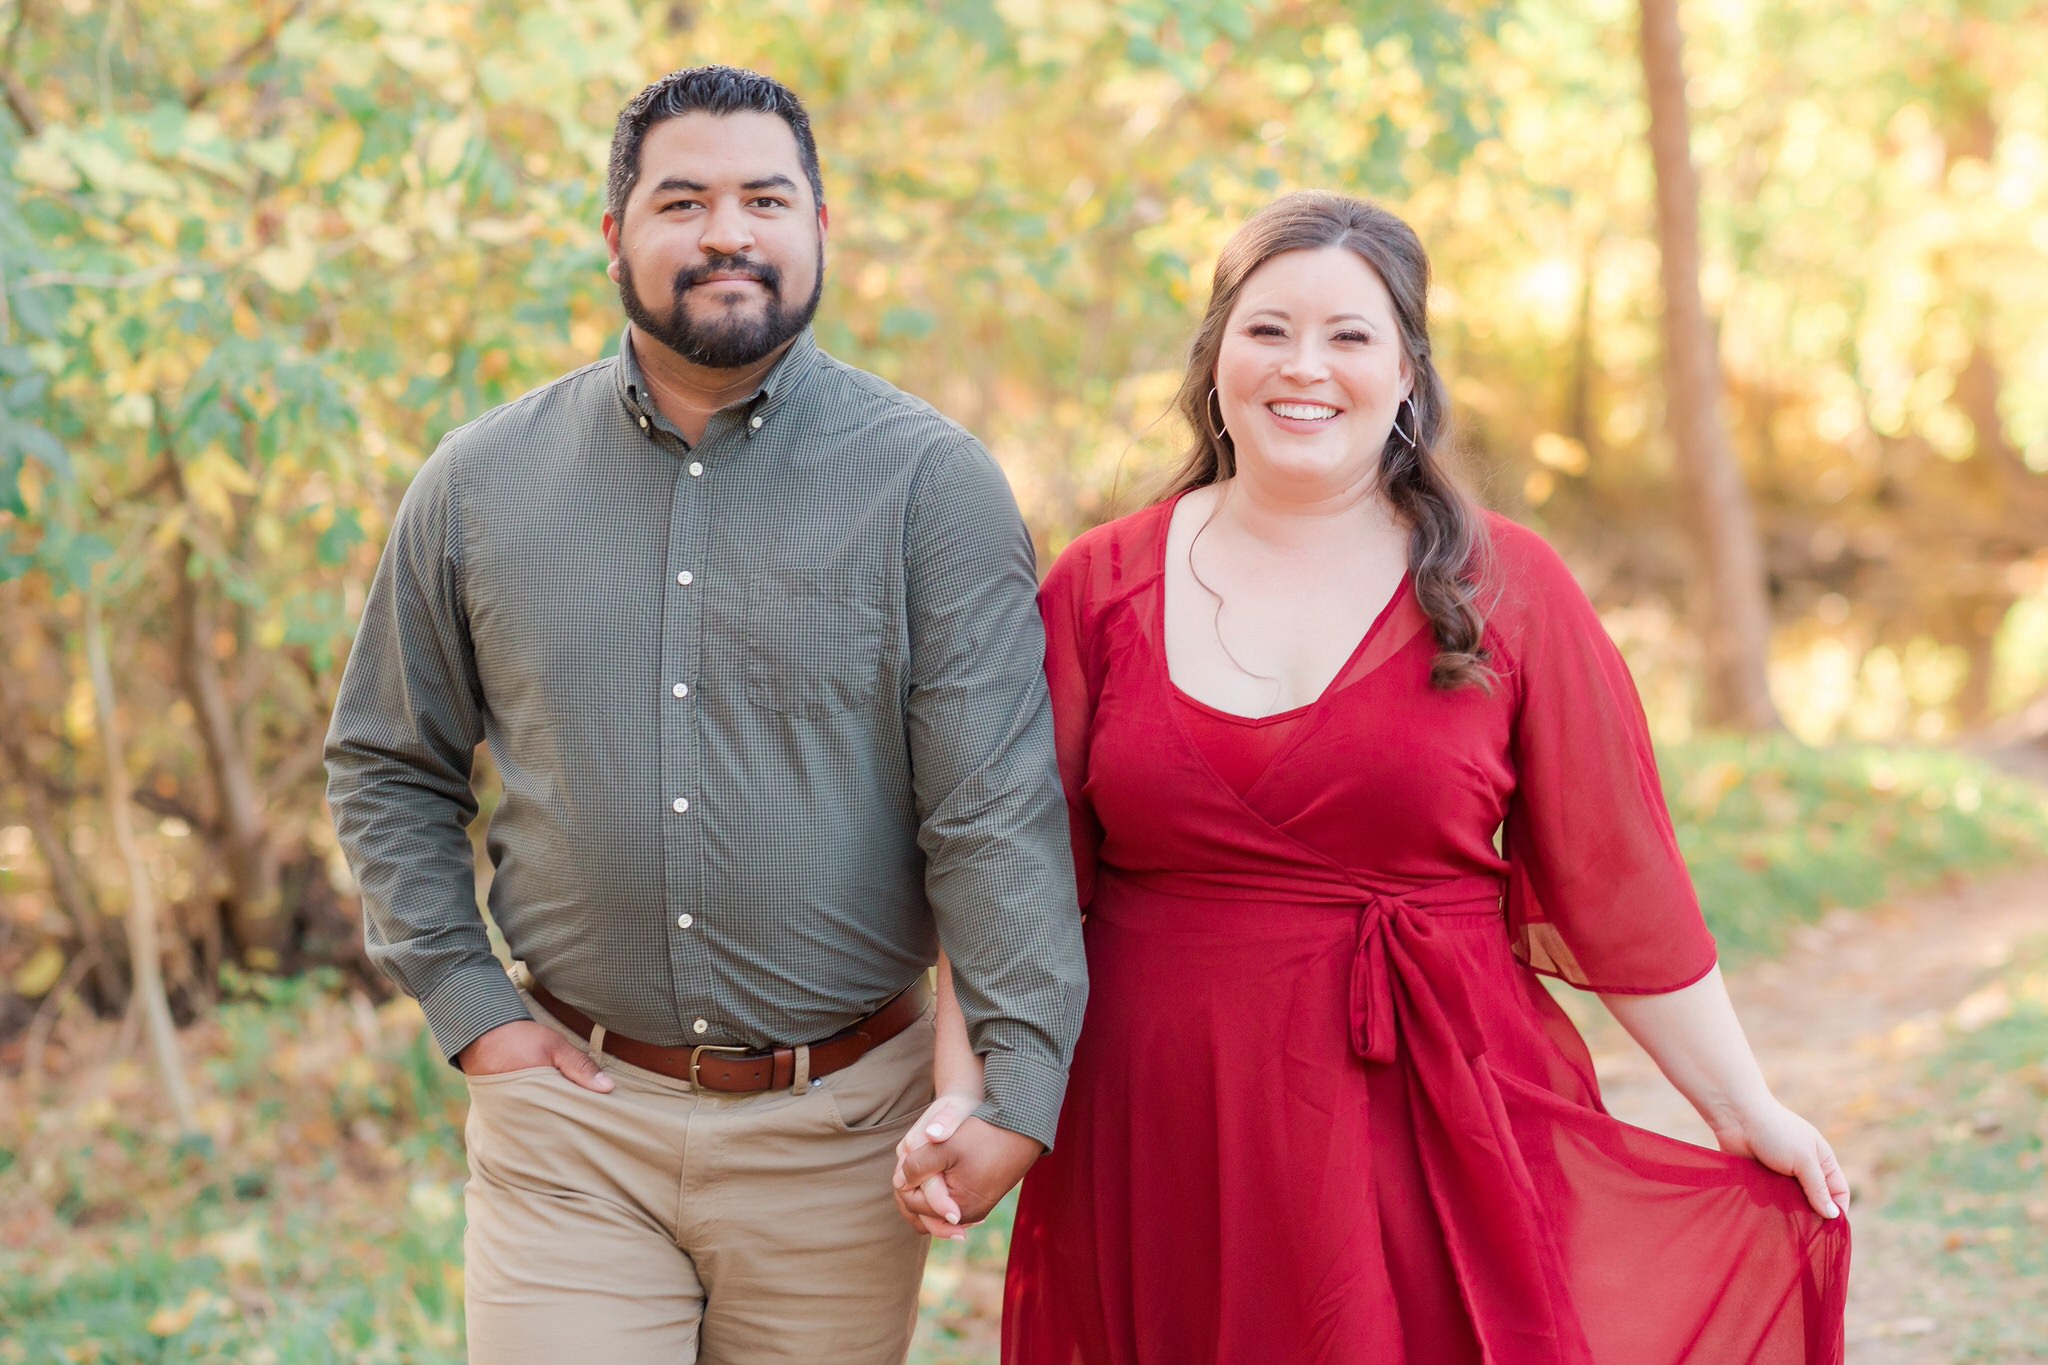 Engagement Session at Cibolo Nature Center by Dawn Elizabeth Studios, San Antonio Wedding Photographer